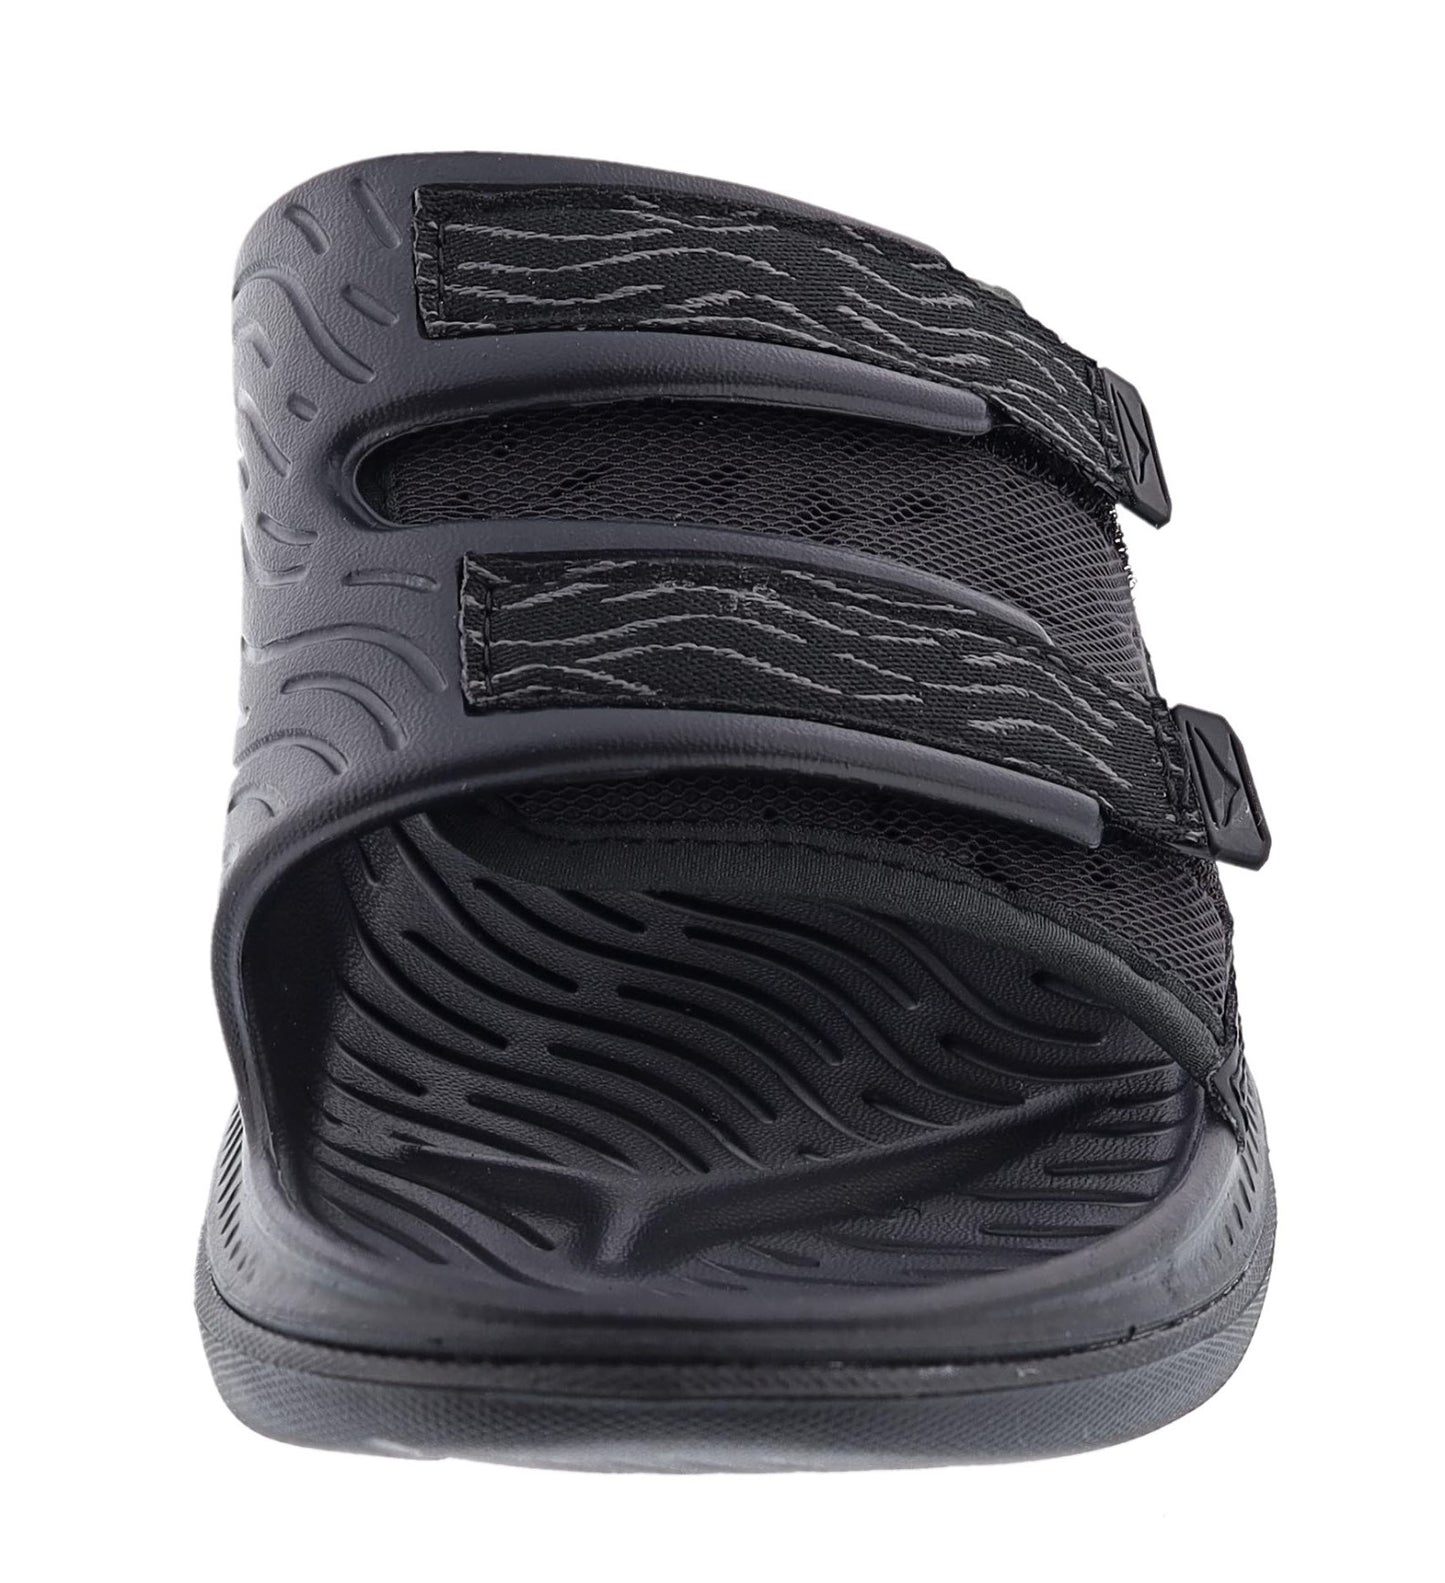 
                  
                    Hoka Unisex Ora Luxe Dual Strap Sandals for Plantar Fasciitis
                  
                